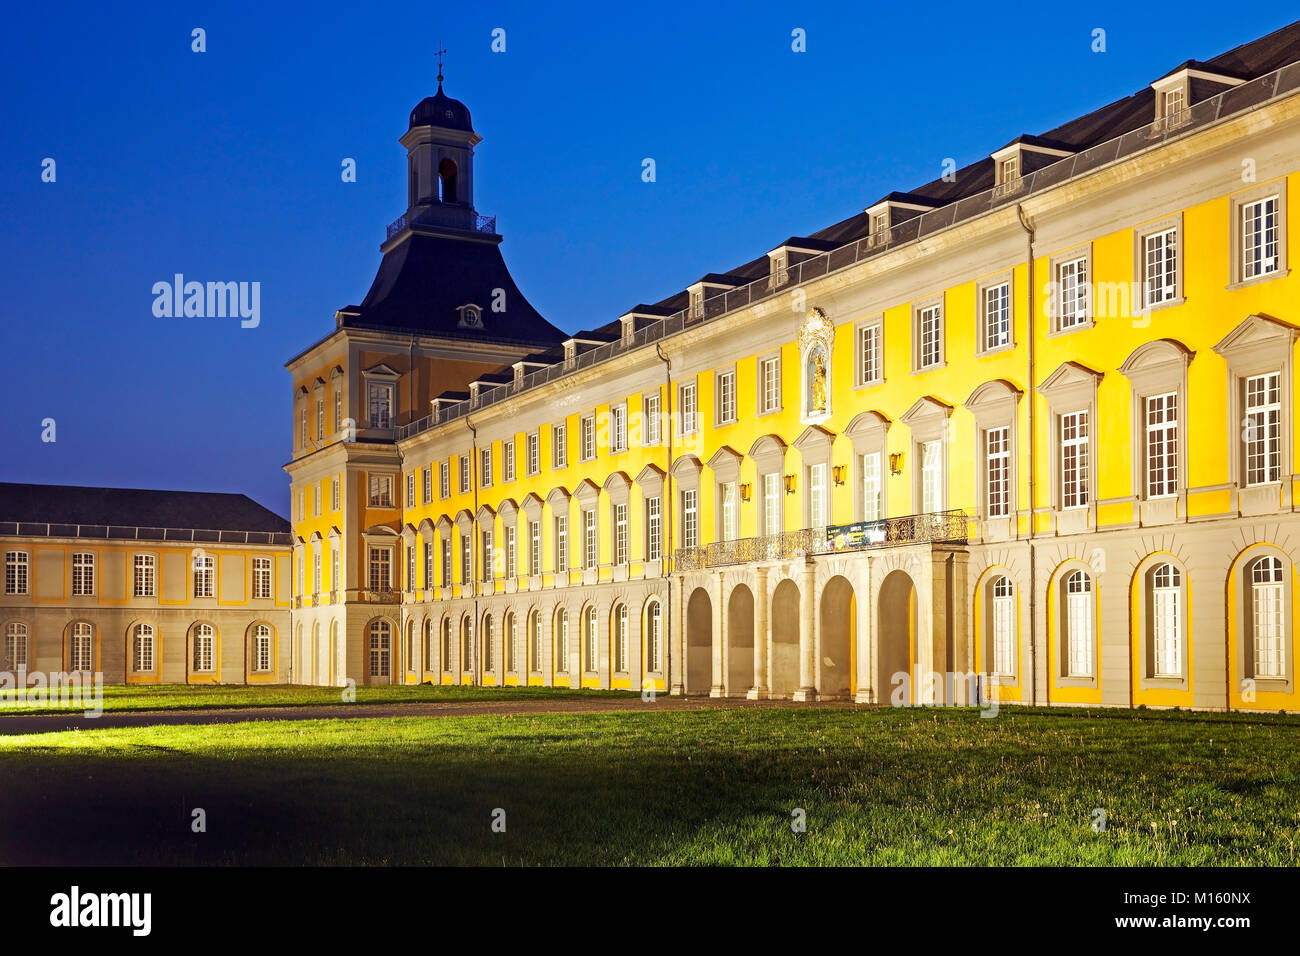 Former Electoral Palace and present main university building at dusk,Bonn,North Rhine-Westphalia,Germany Stock Photo